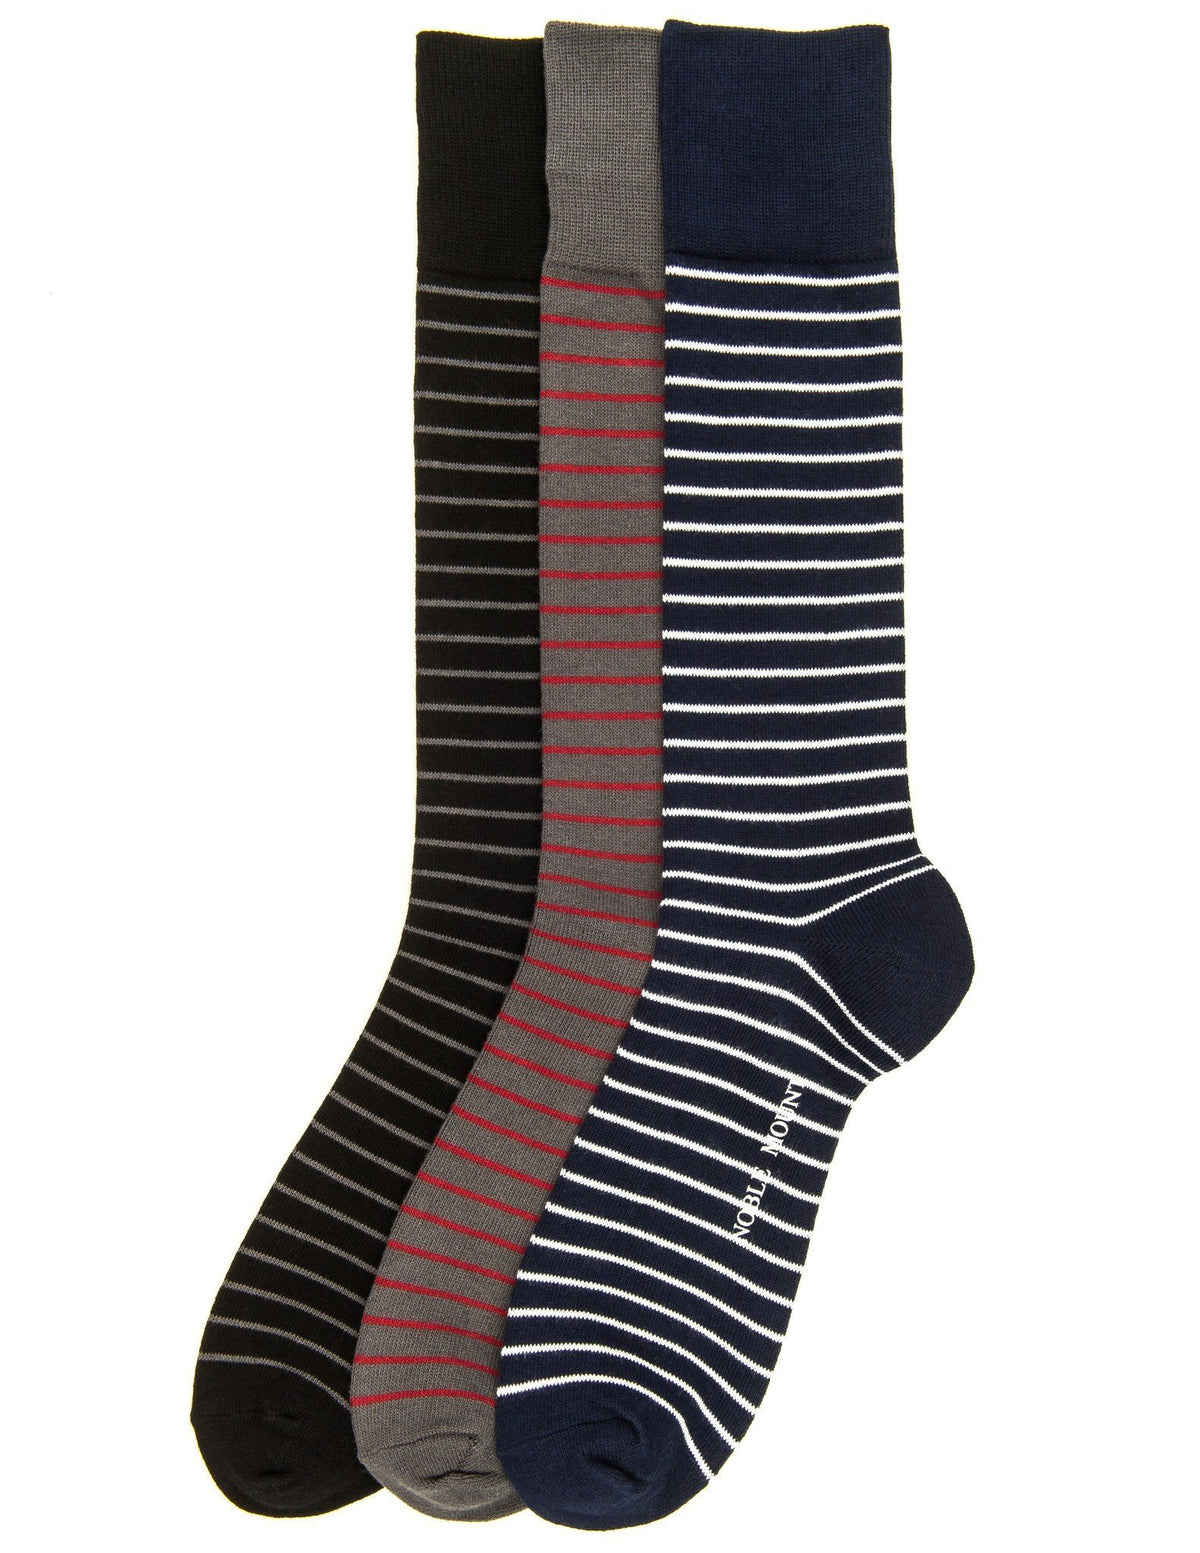 Men's Combed Cotton Dress Socks 3-Pack - Set B6